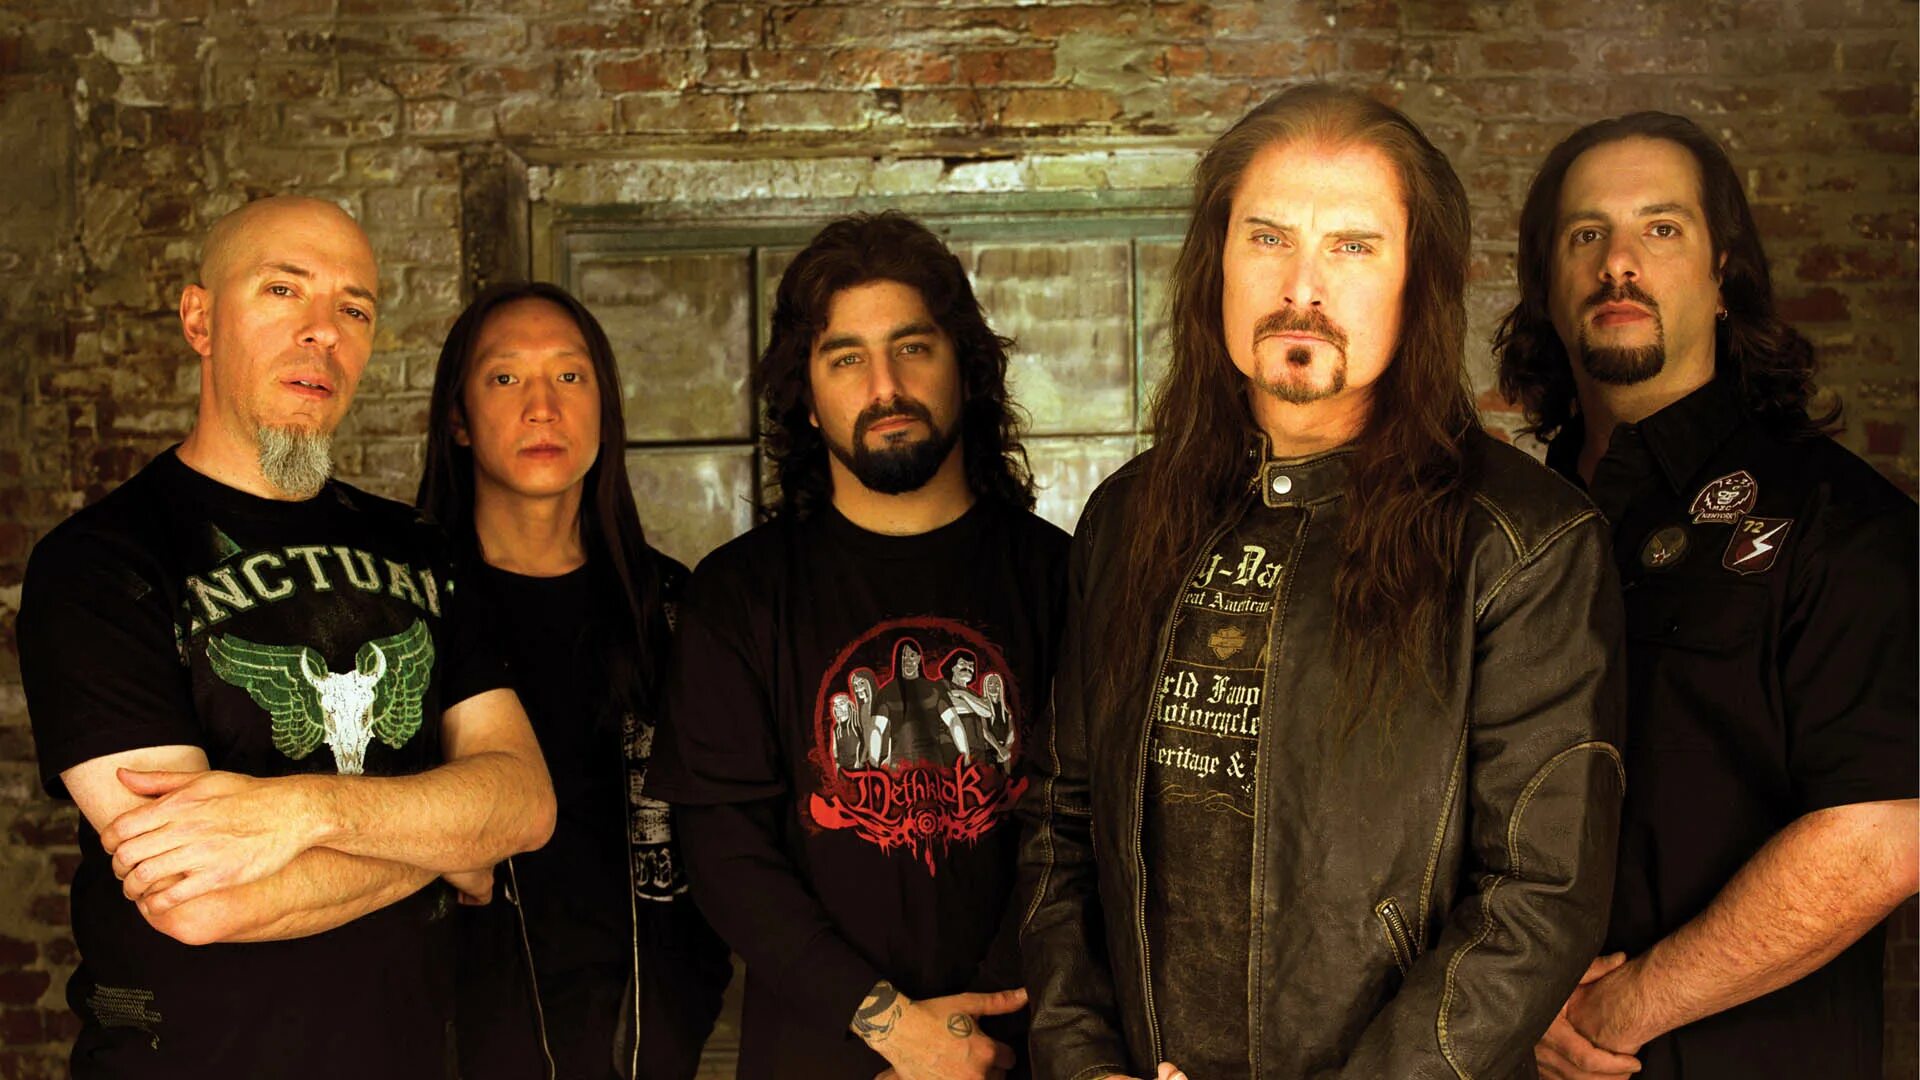 Группа Dream Theater. Dream Theater фото группы. Группа Dream Theater 2007. Dream Theater 2021.